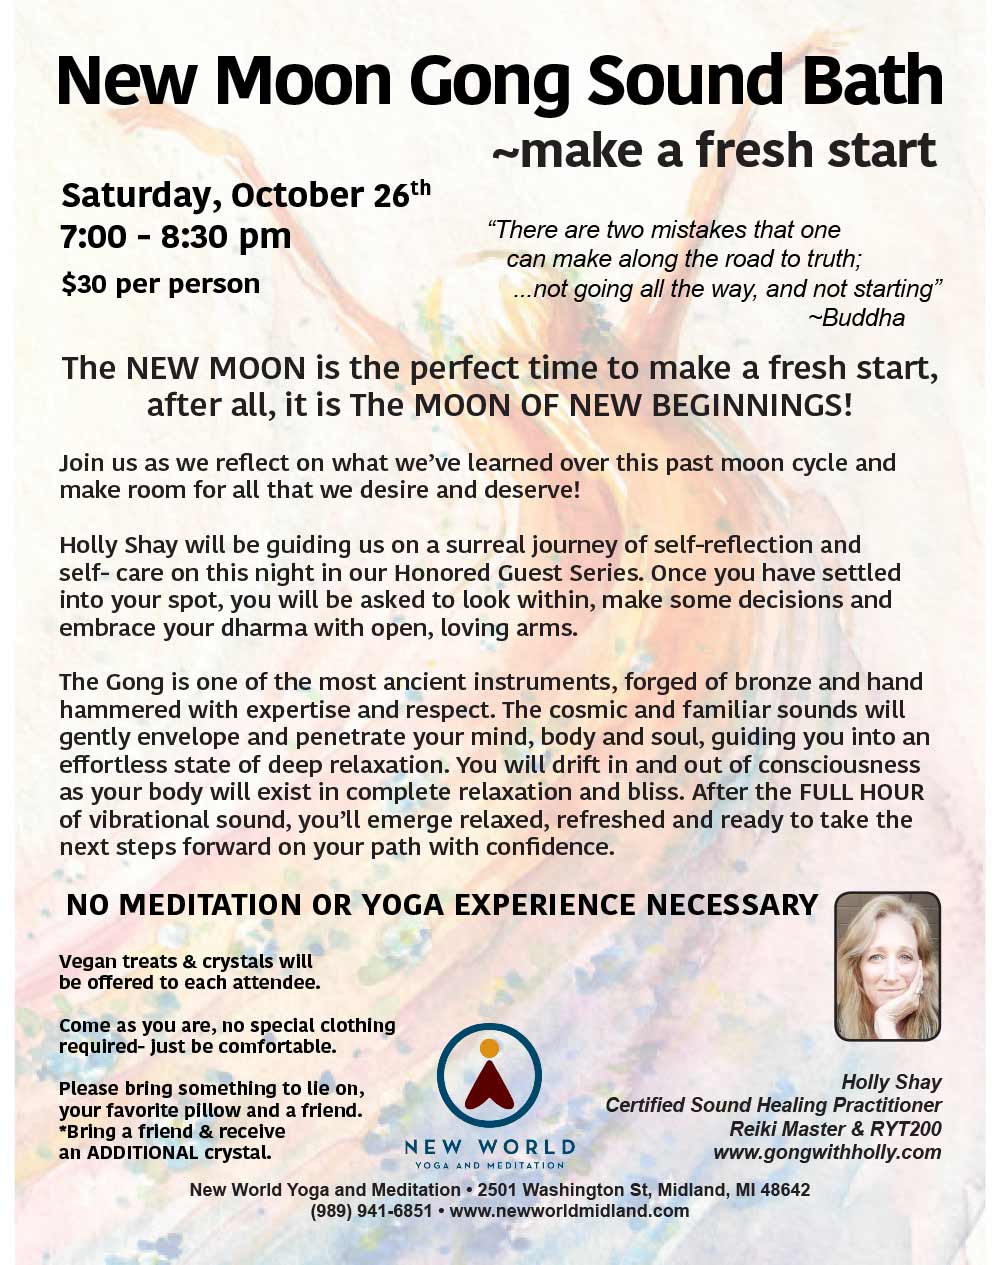 New Moon Gong Sound Bath, Oct 26, New World Yoga and Meditation, Midland, MI